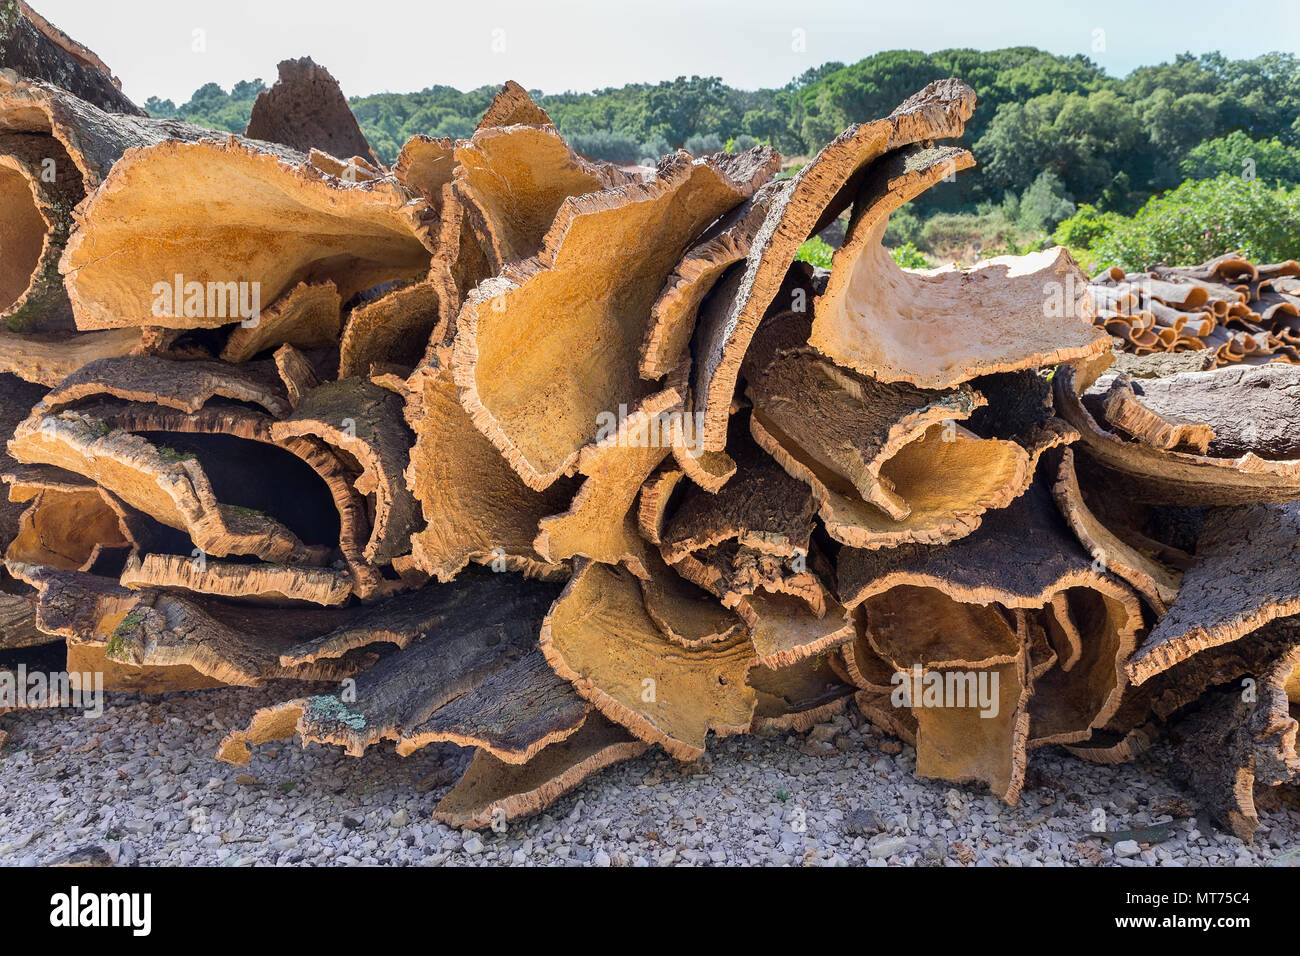 Heap of cork tree bark as raw commodity outside Stock Photo